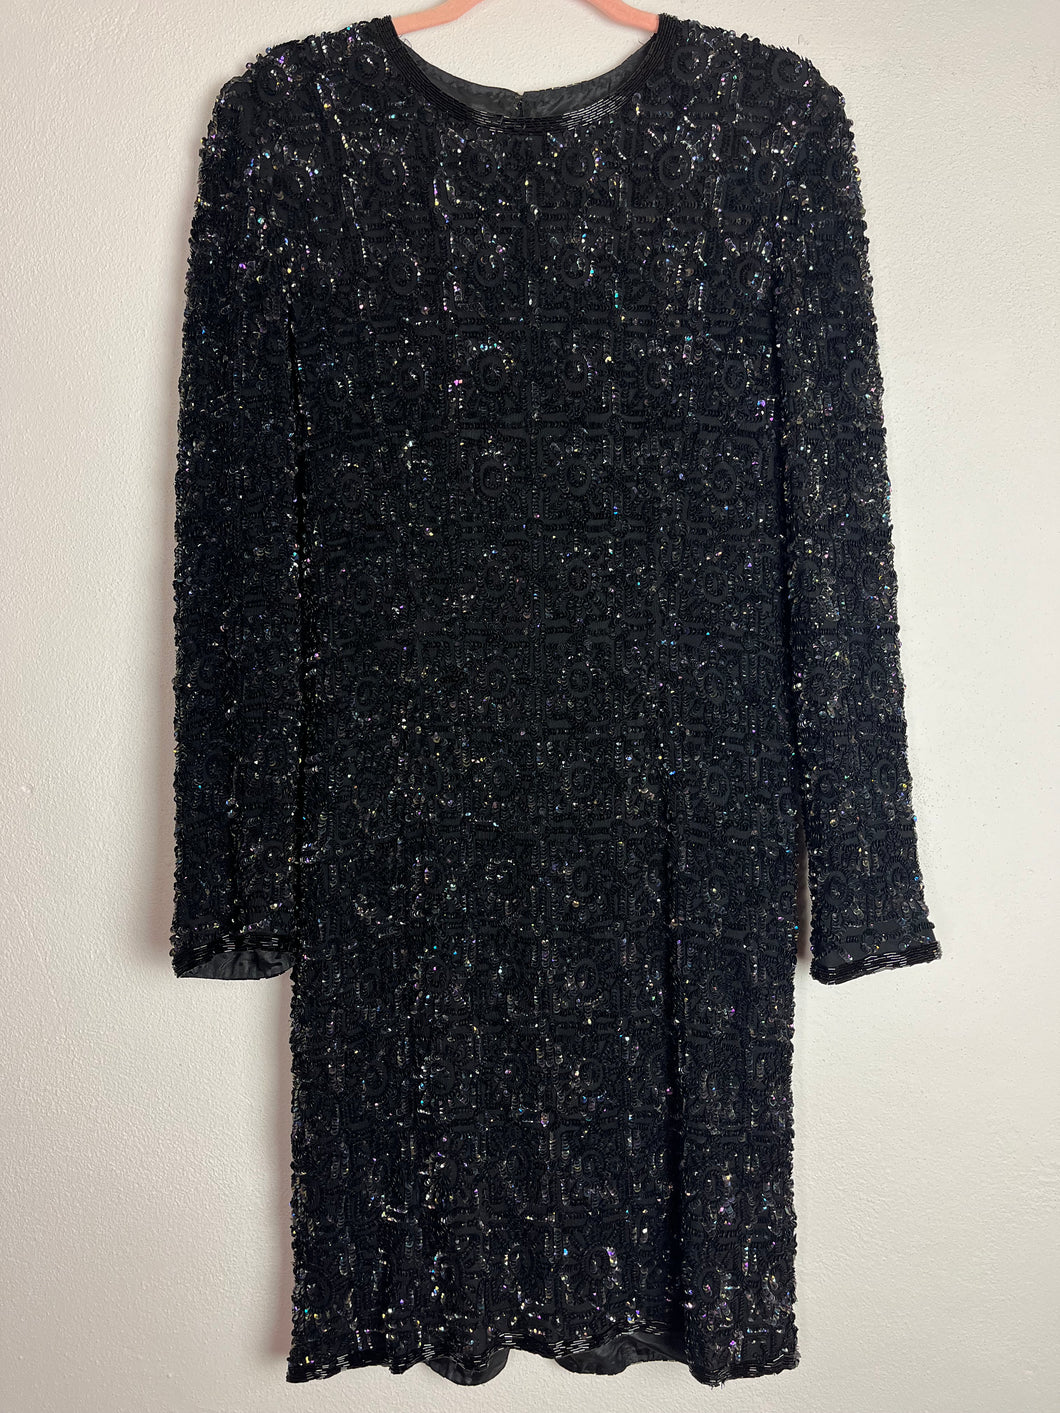 Silk Long Sleeve Sequin Dress - Large